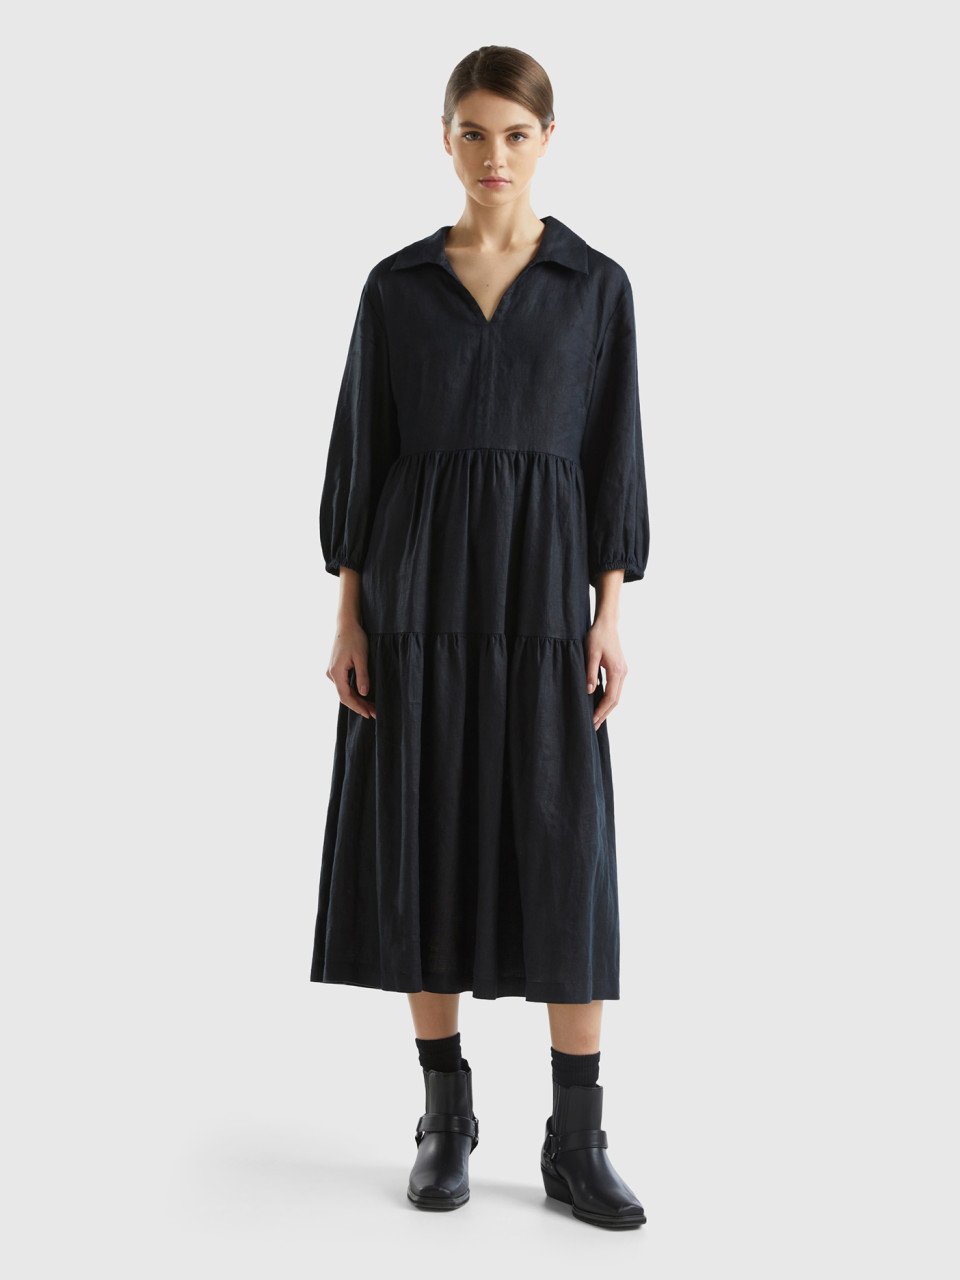 Benetton, Dress With Ruffles In Pure Linen, Black, Women